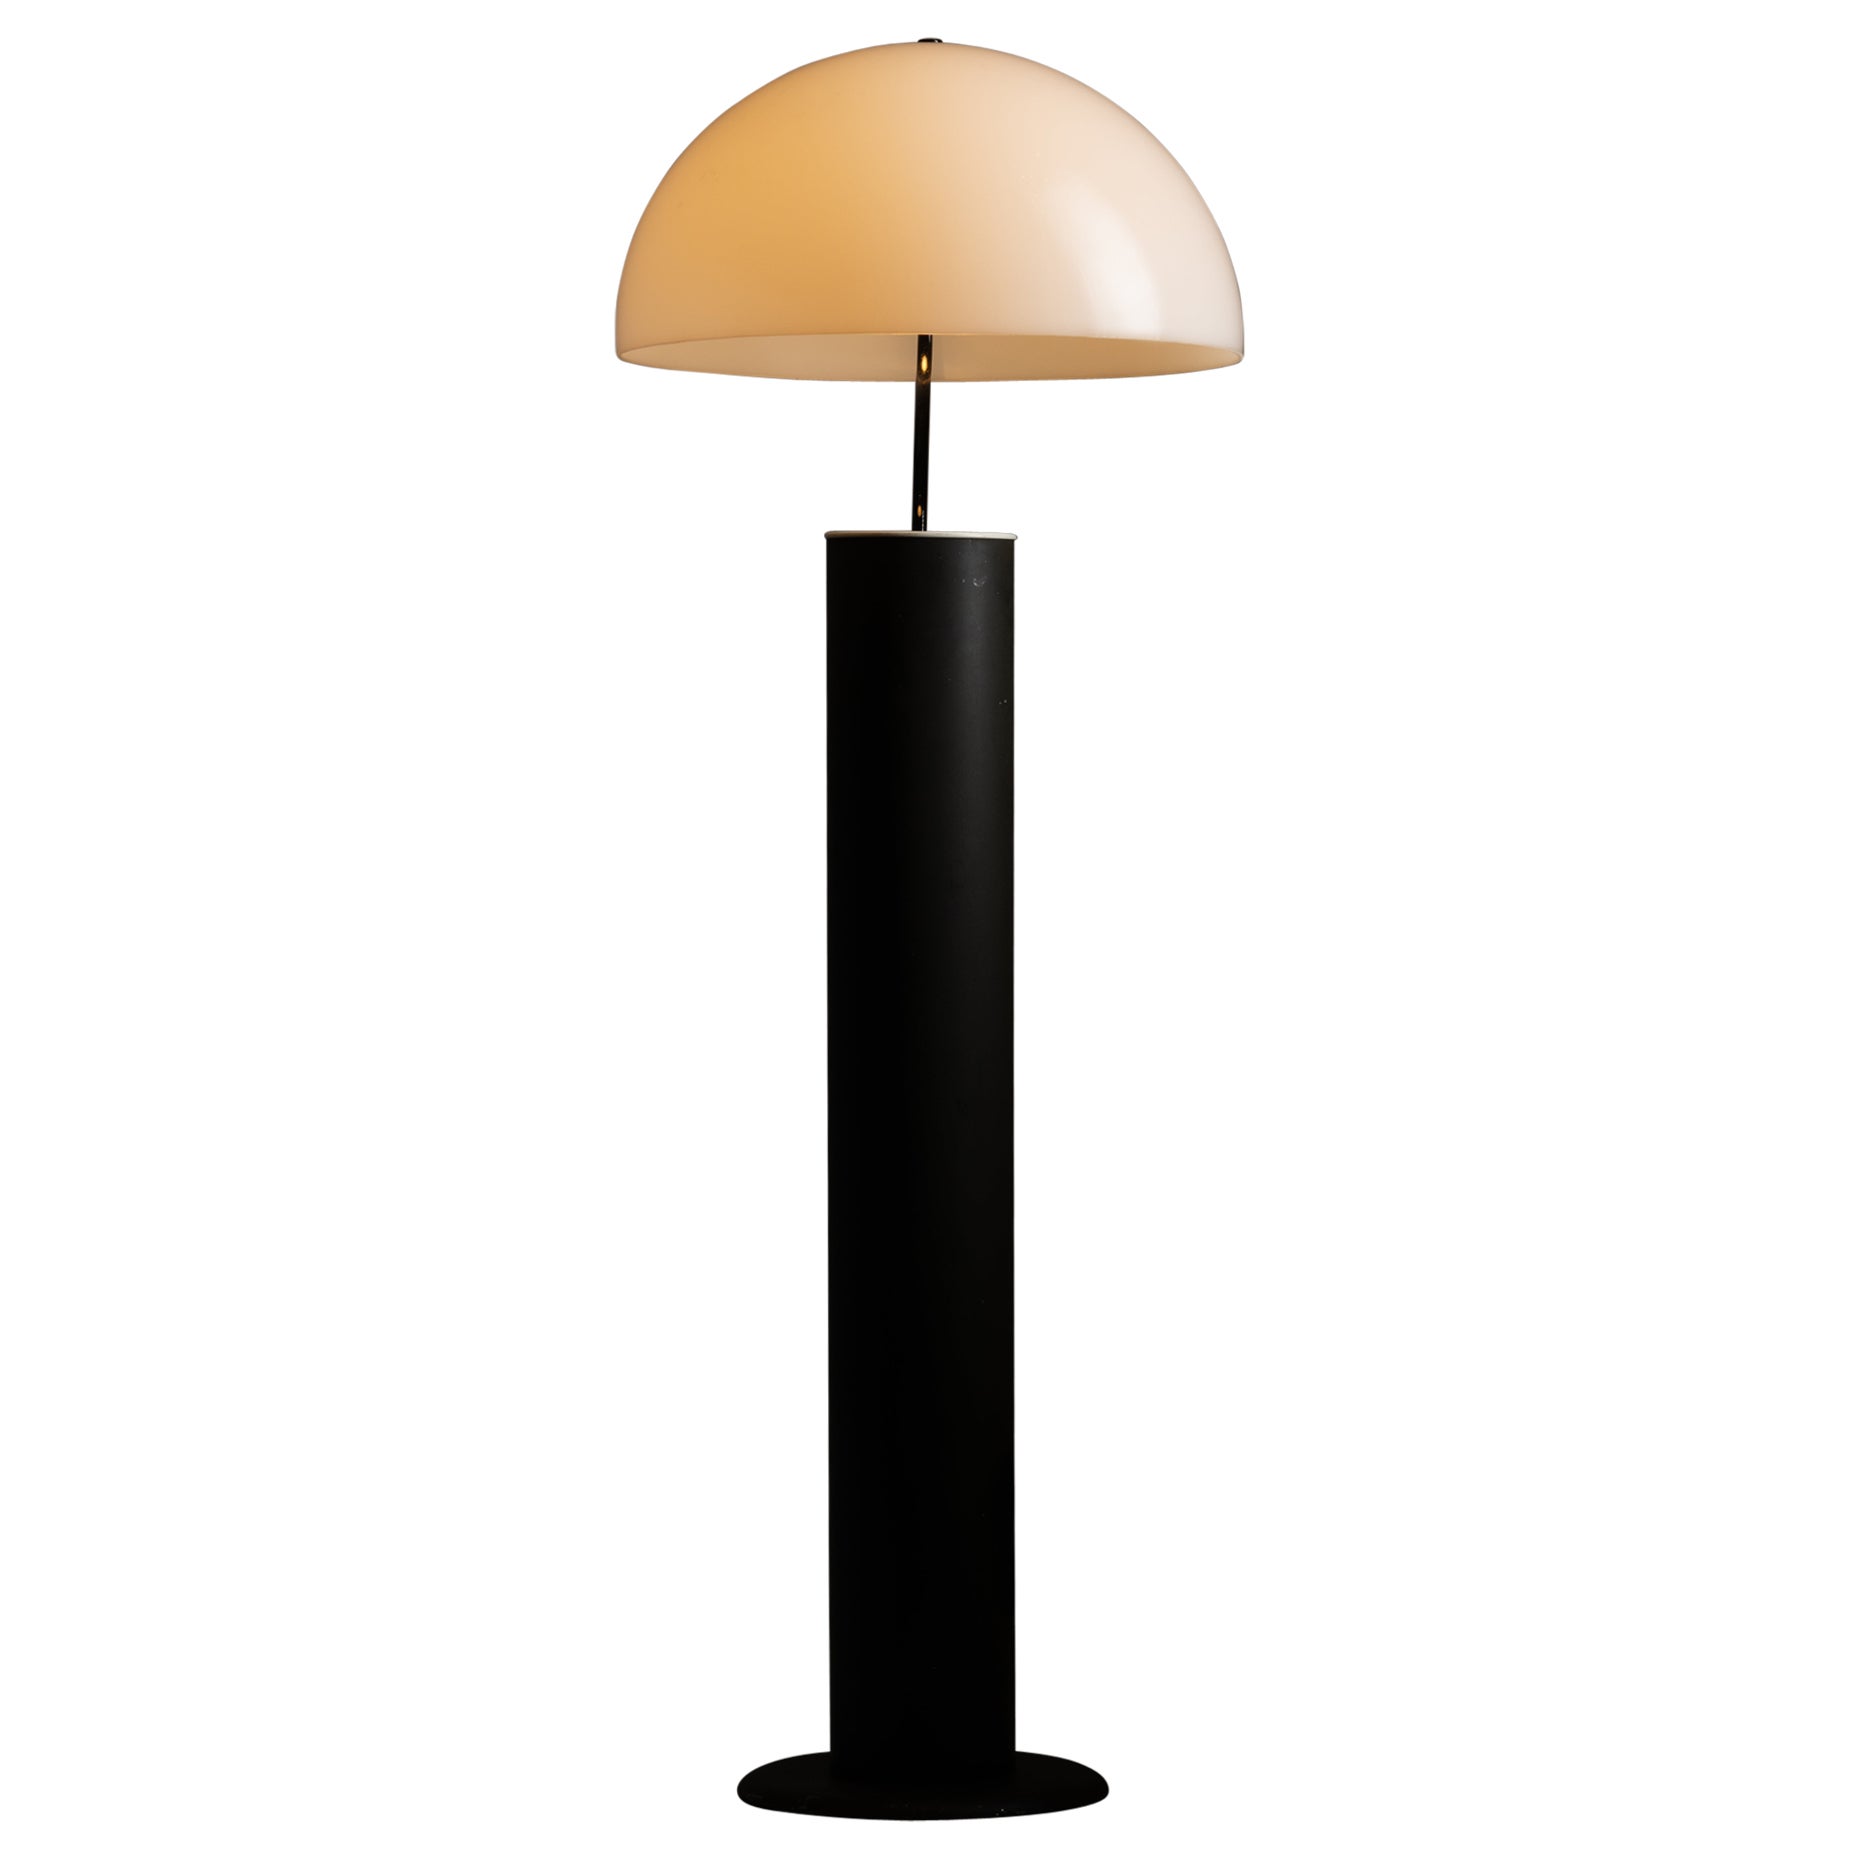 Alida Floor Lamp by Vico Magistretti for Oluce